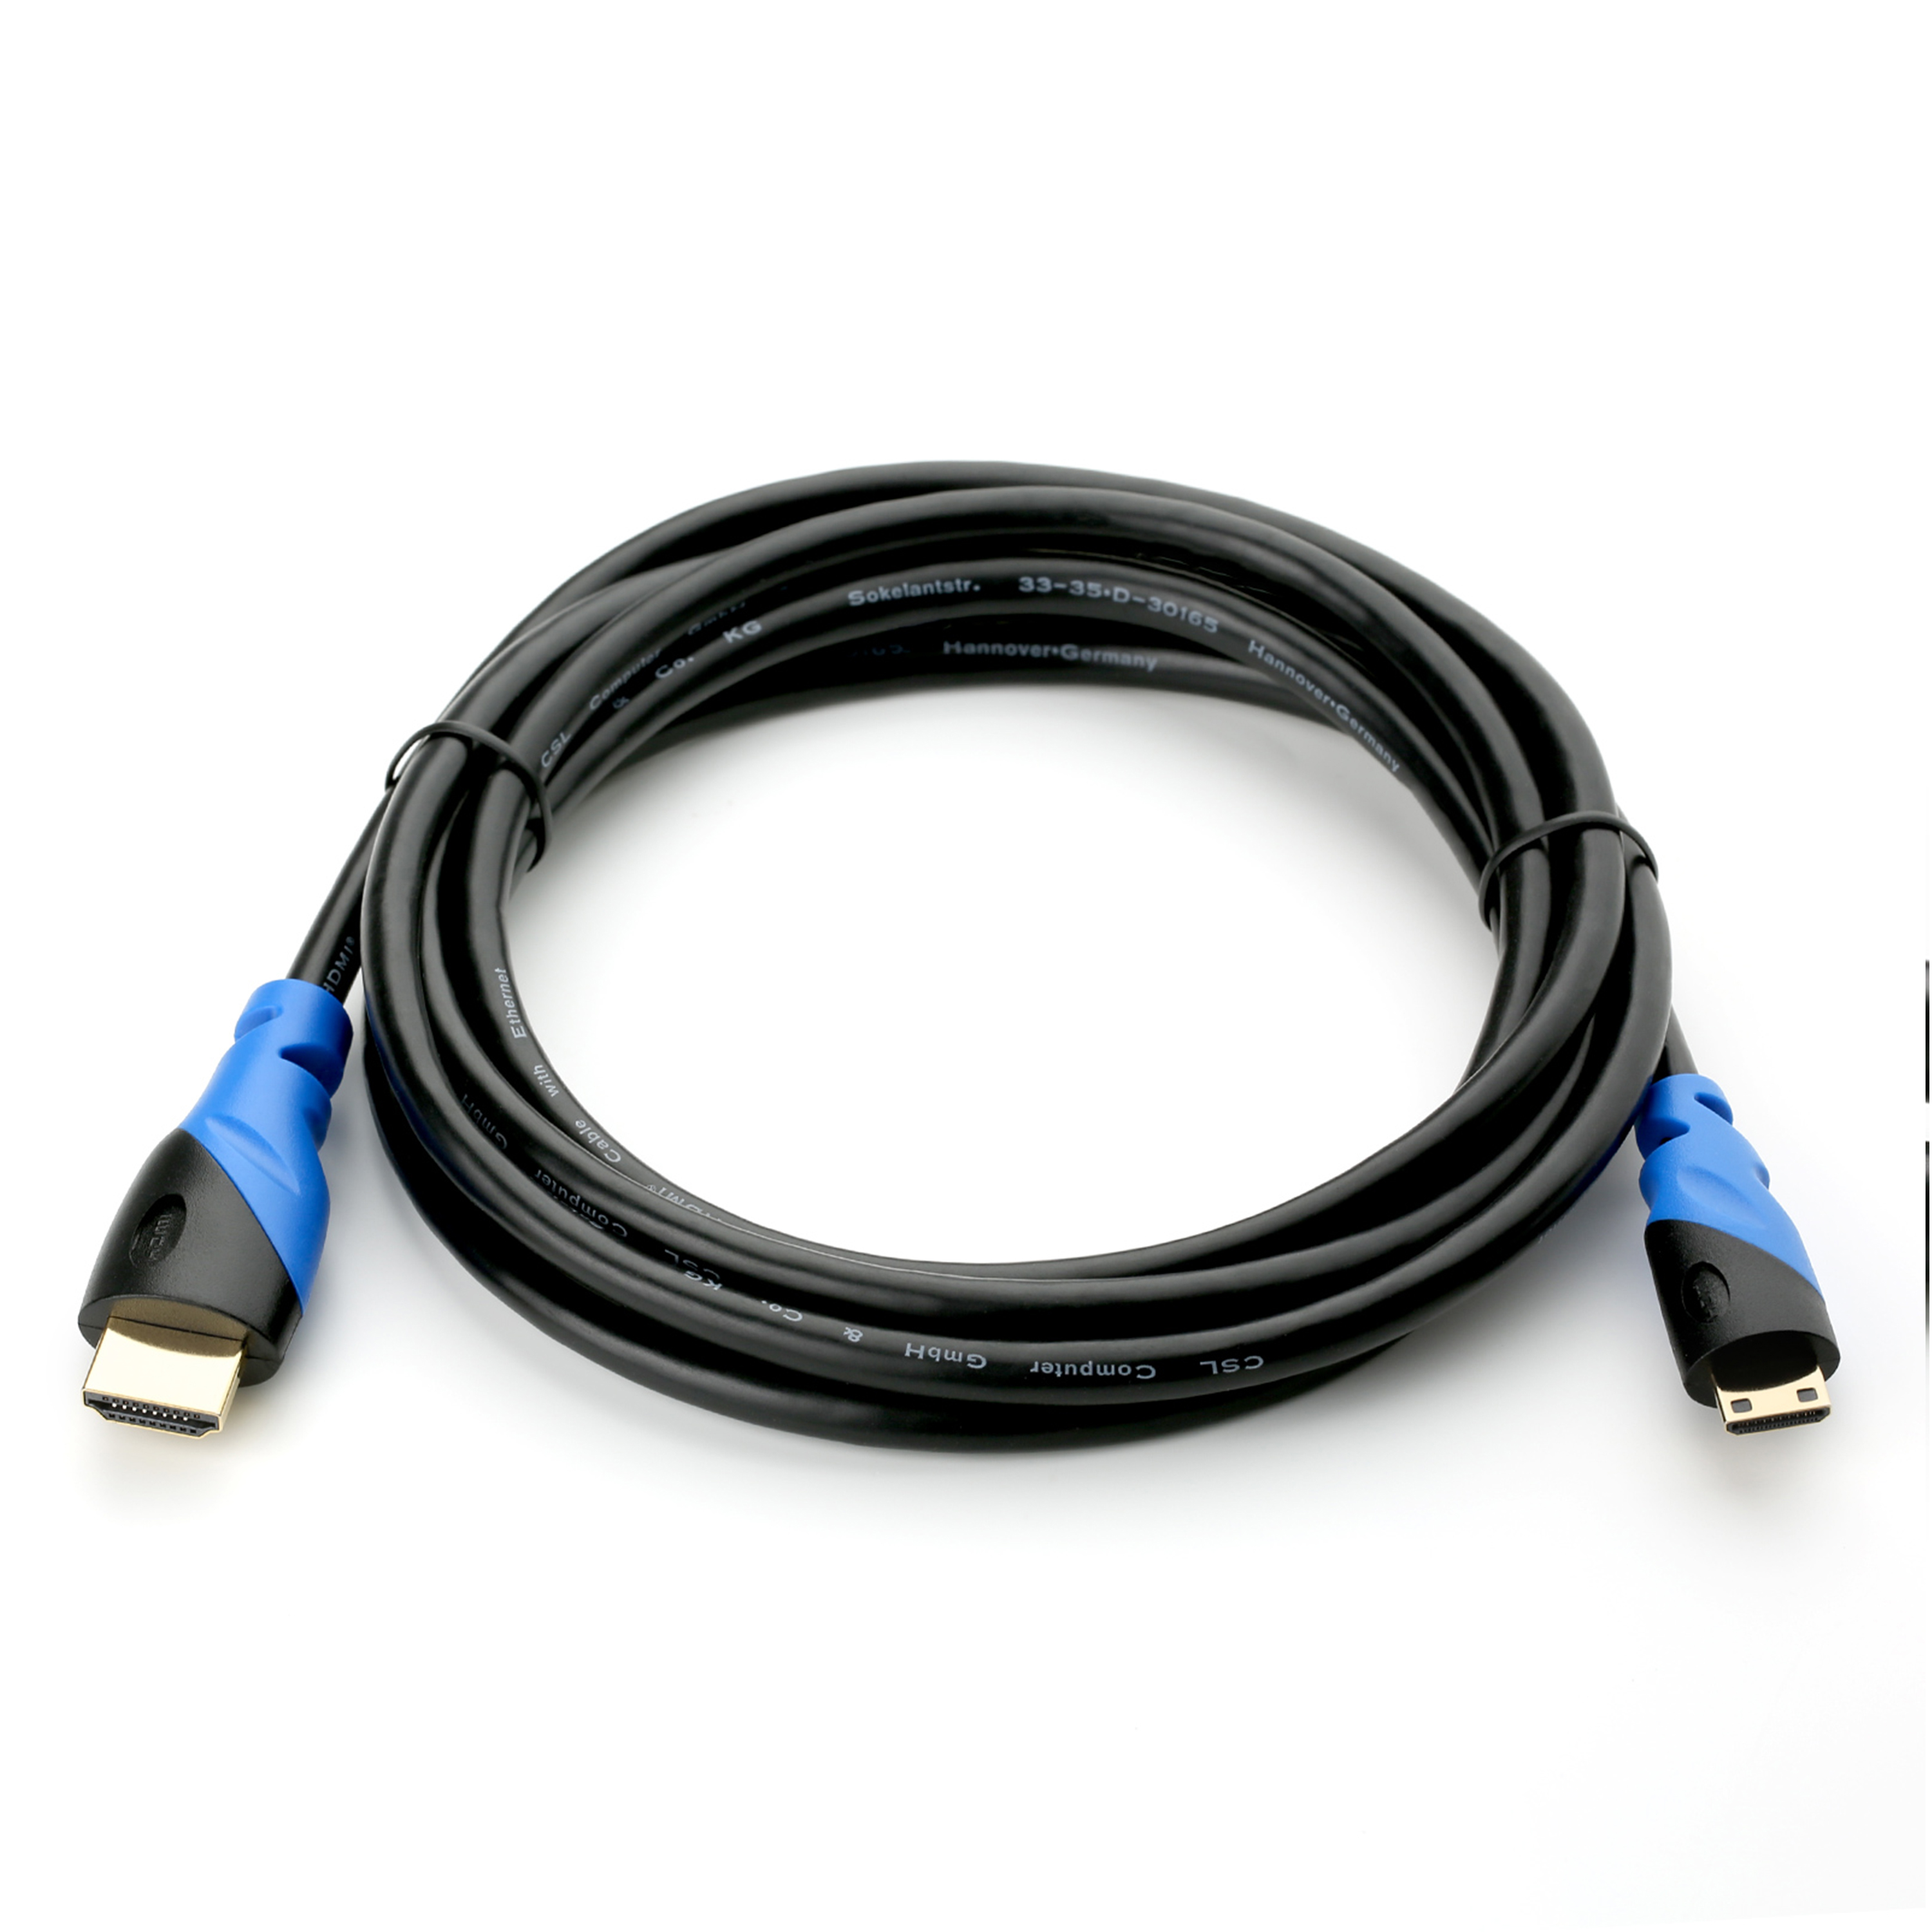 CSL MiniHDMI 2.0 Kabel, HDMI Kabel, 1,5m schwarz/blau